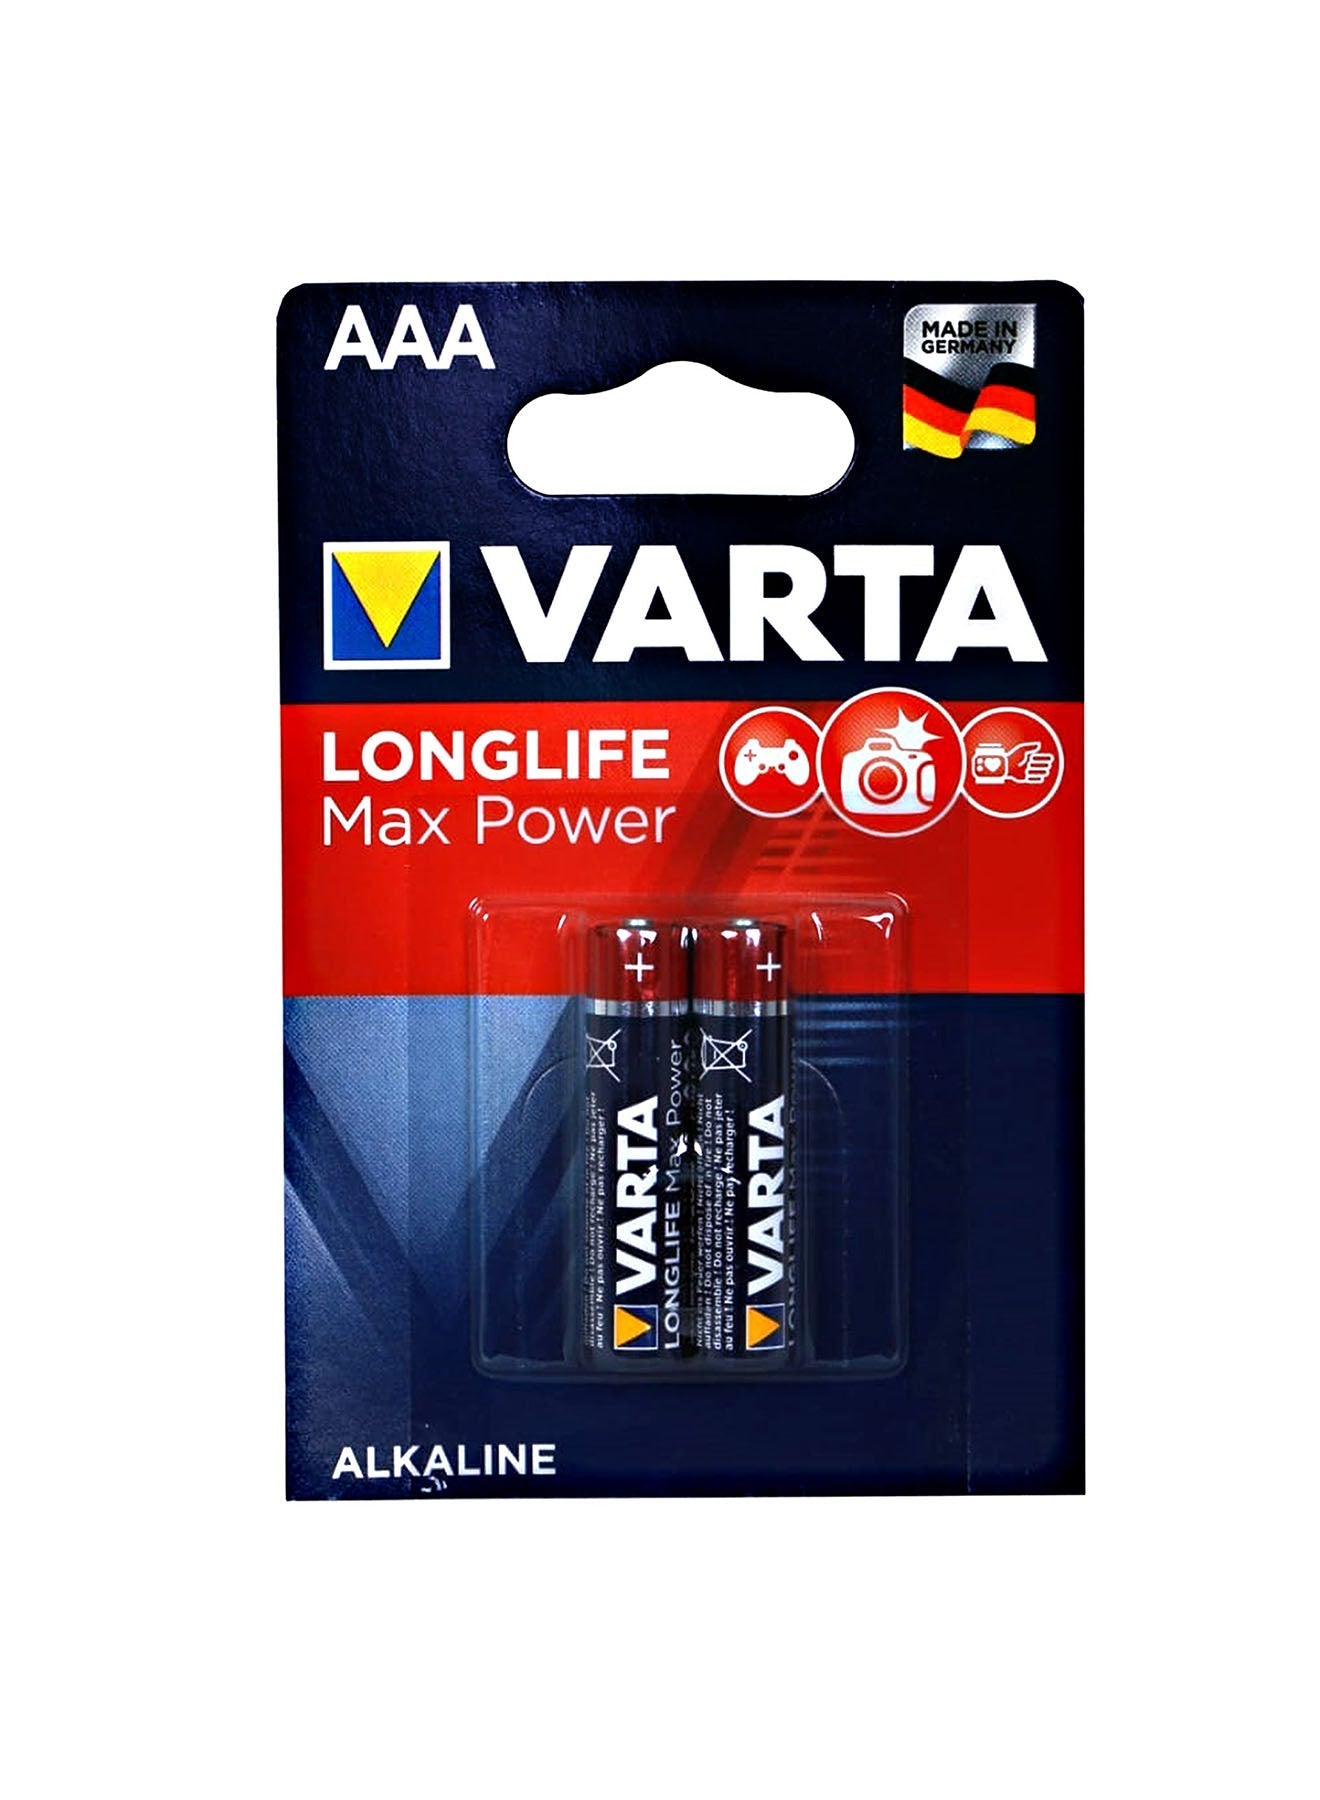 Varta Long Life Max Power Micro AAA Batteries 2 Units Value Pack of 3 